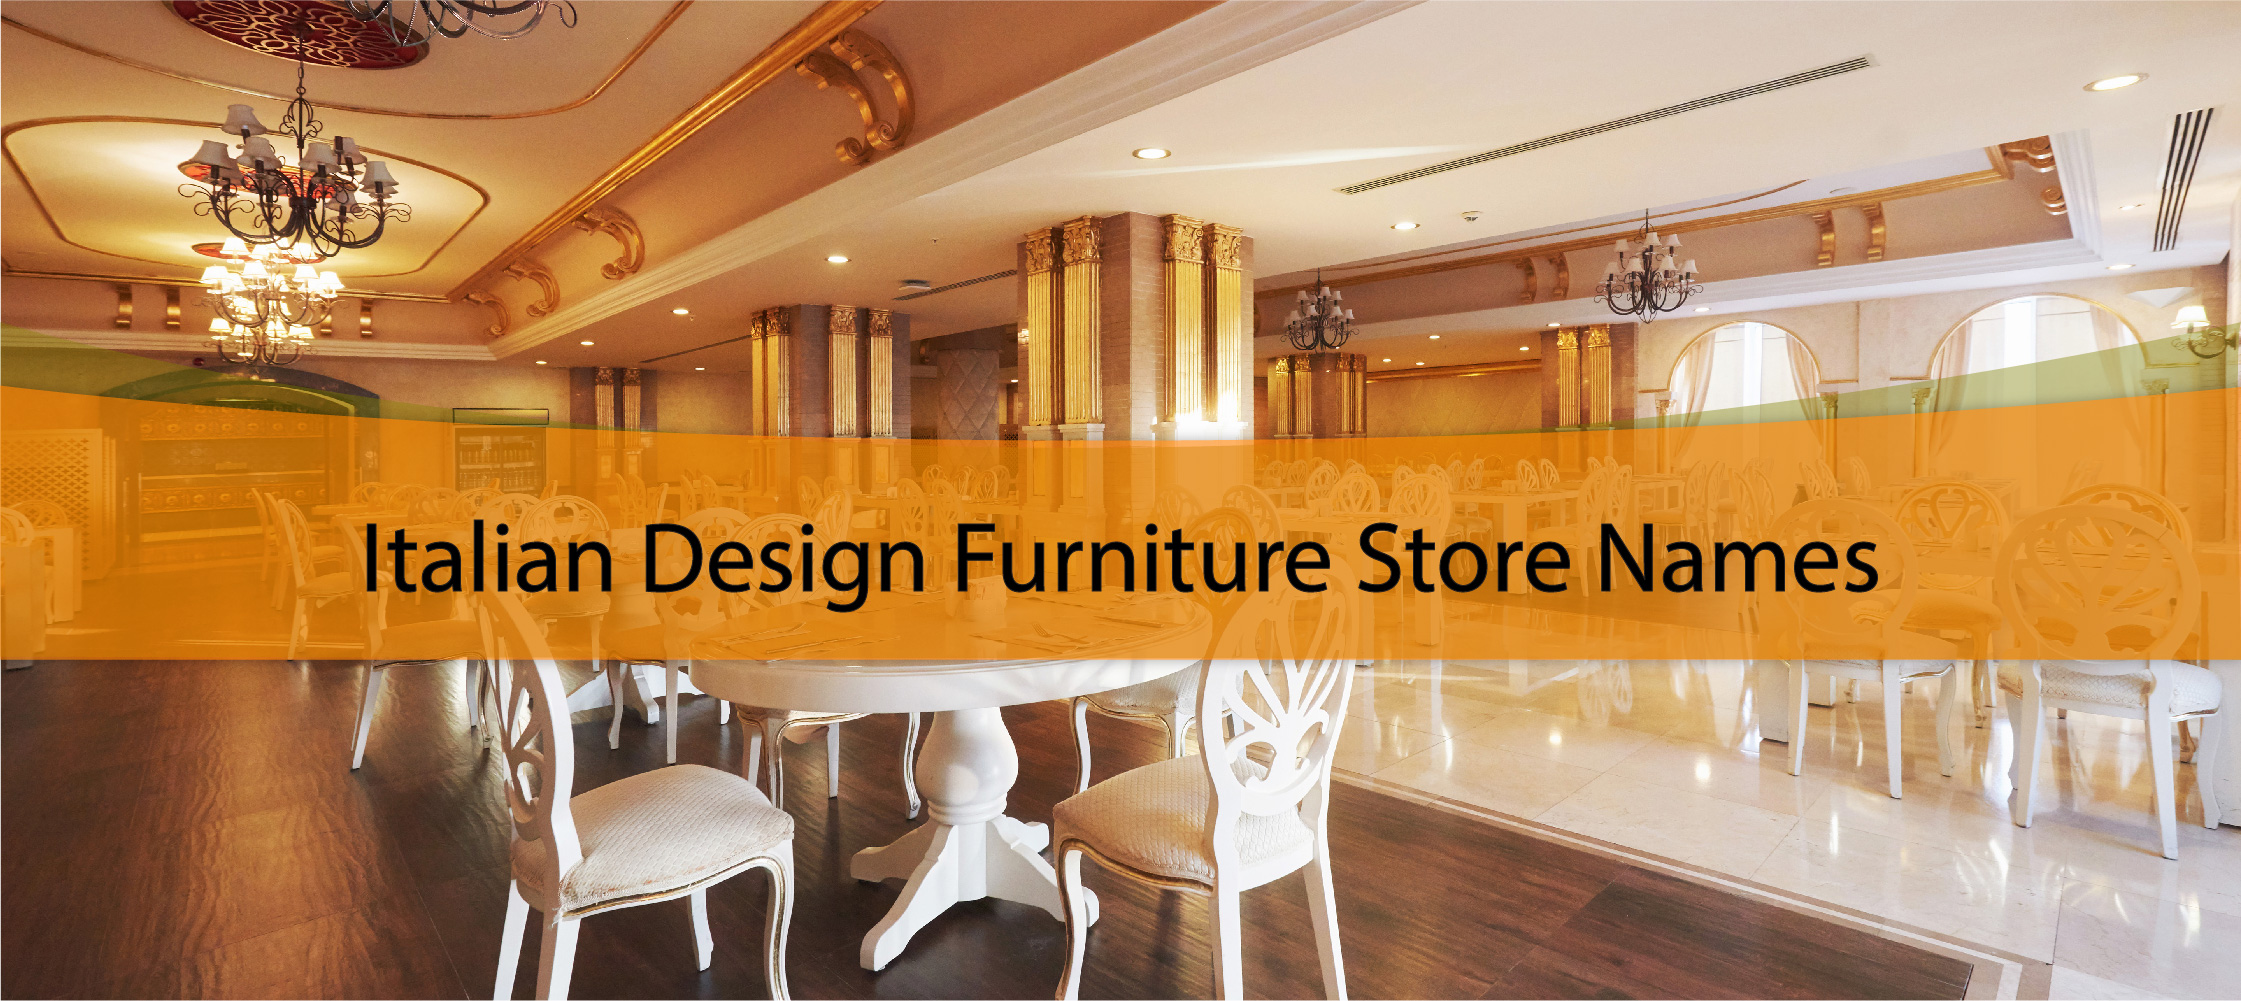 Italian Design Furniture Store Names